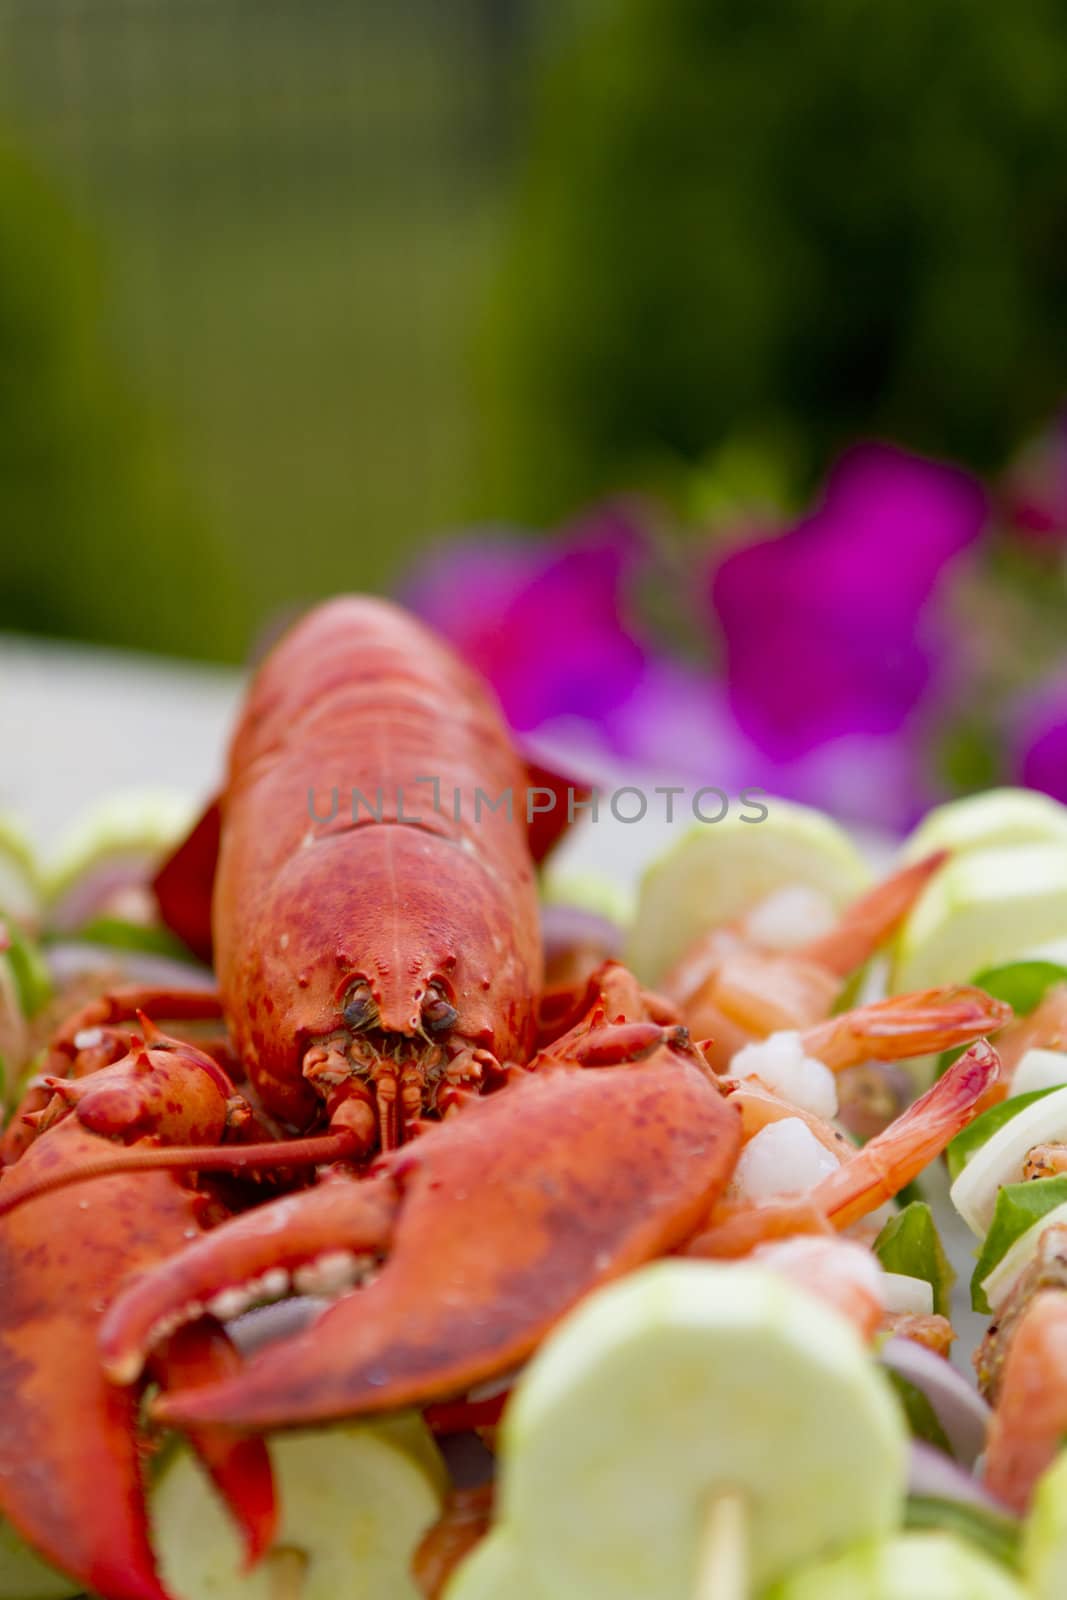 Mr Lobster and shrimp skewers by coskun